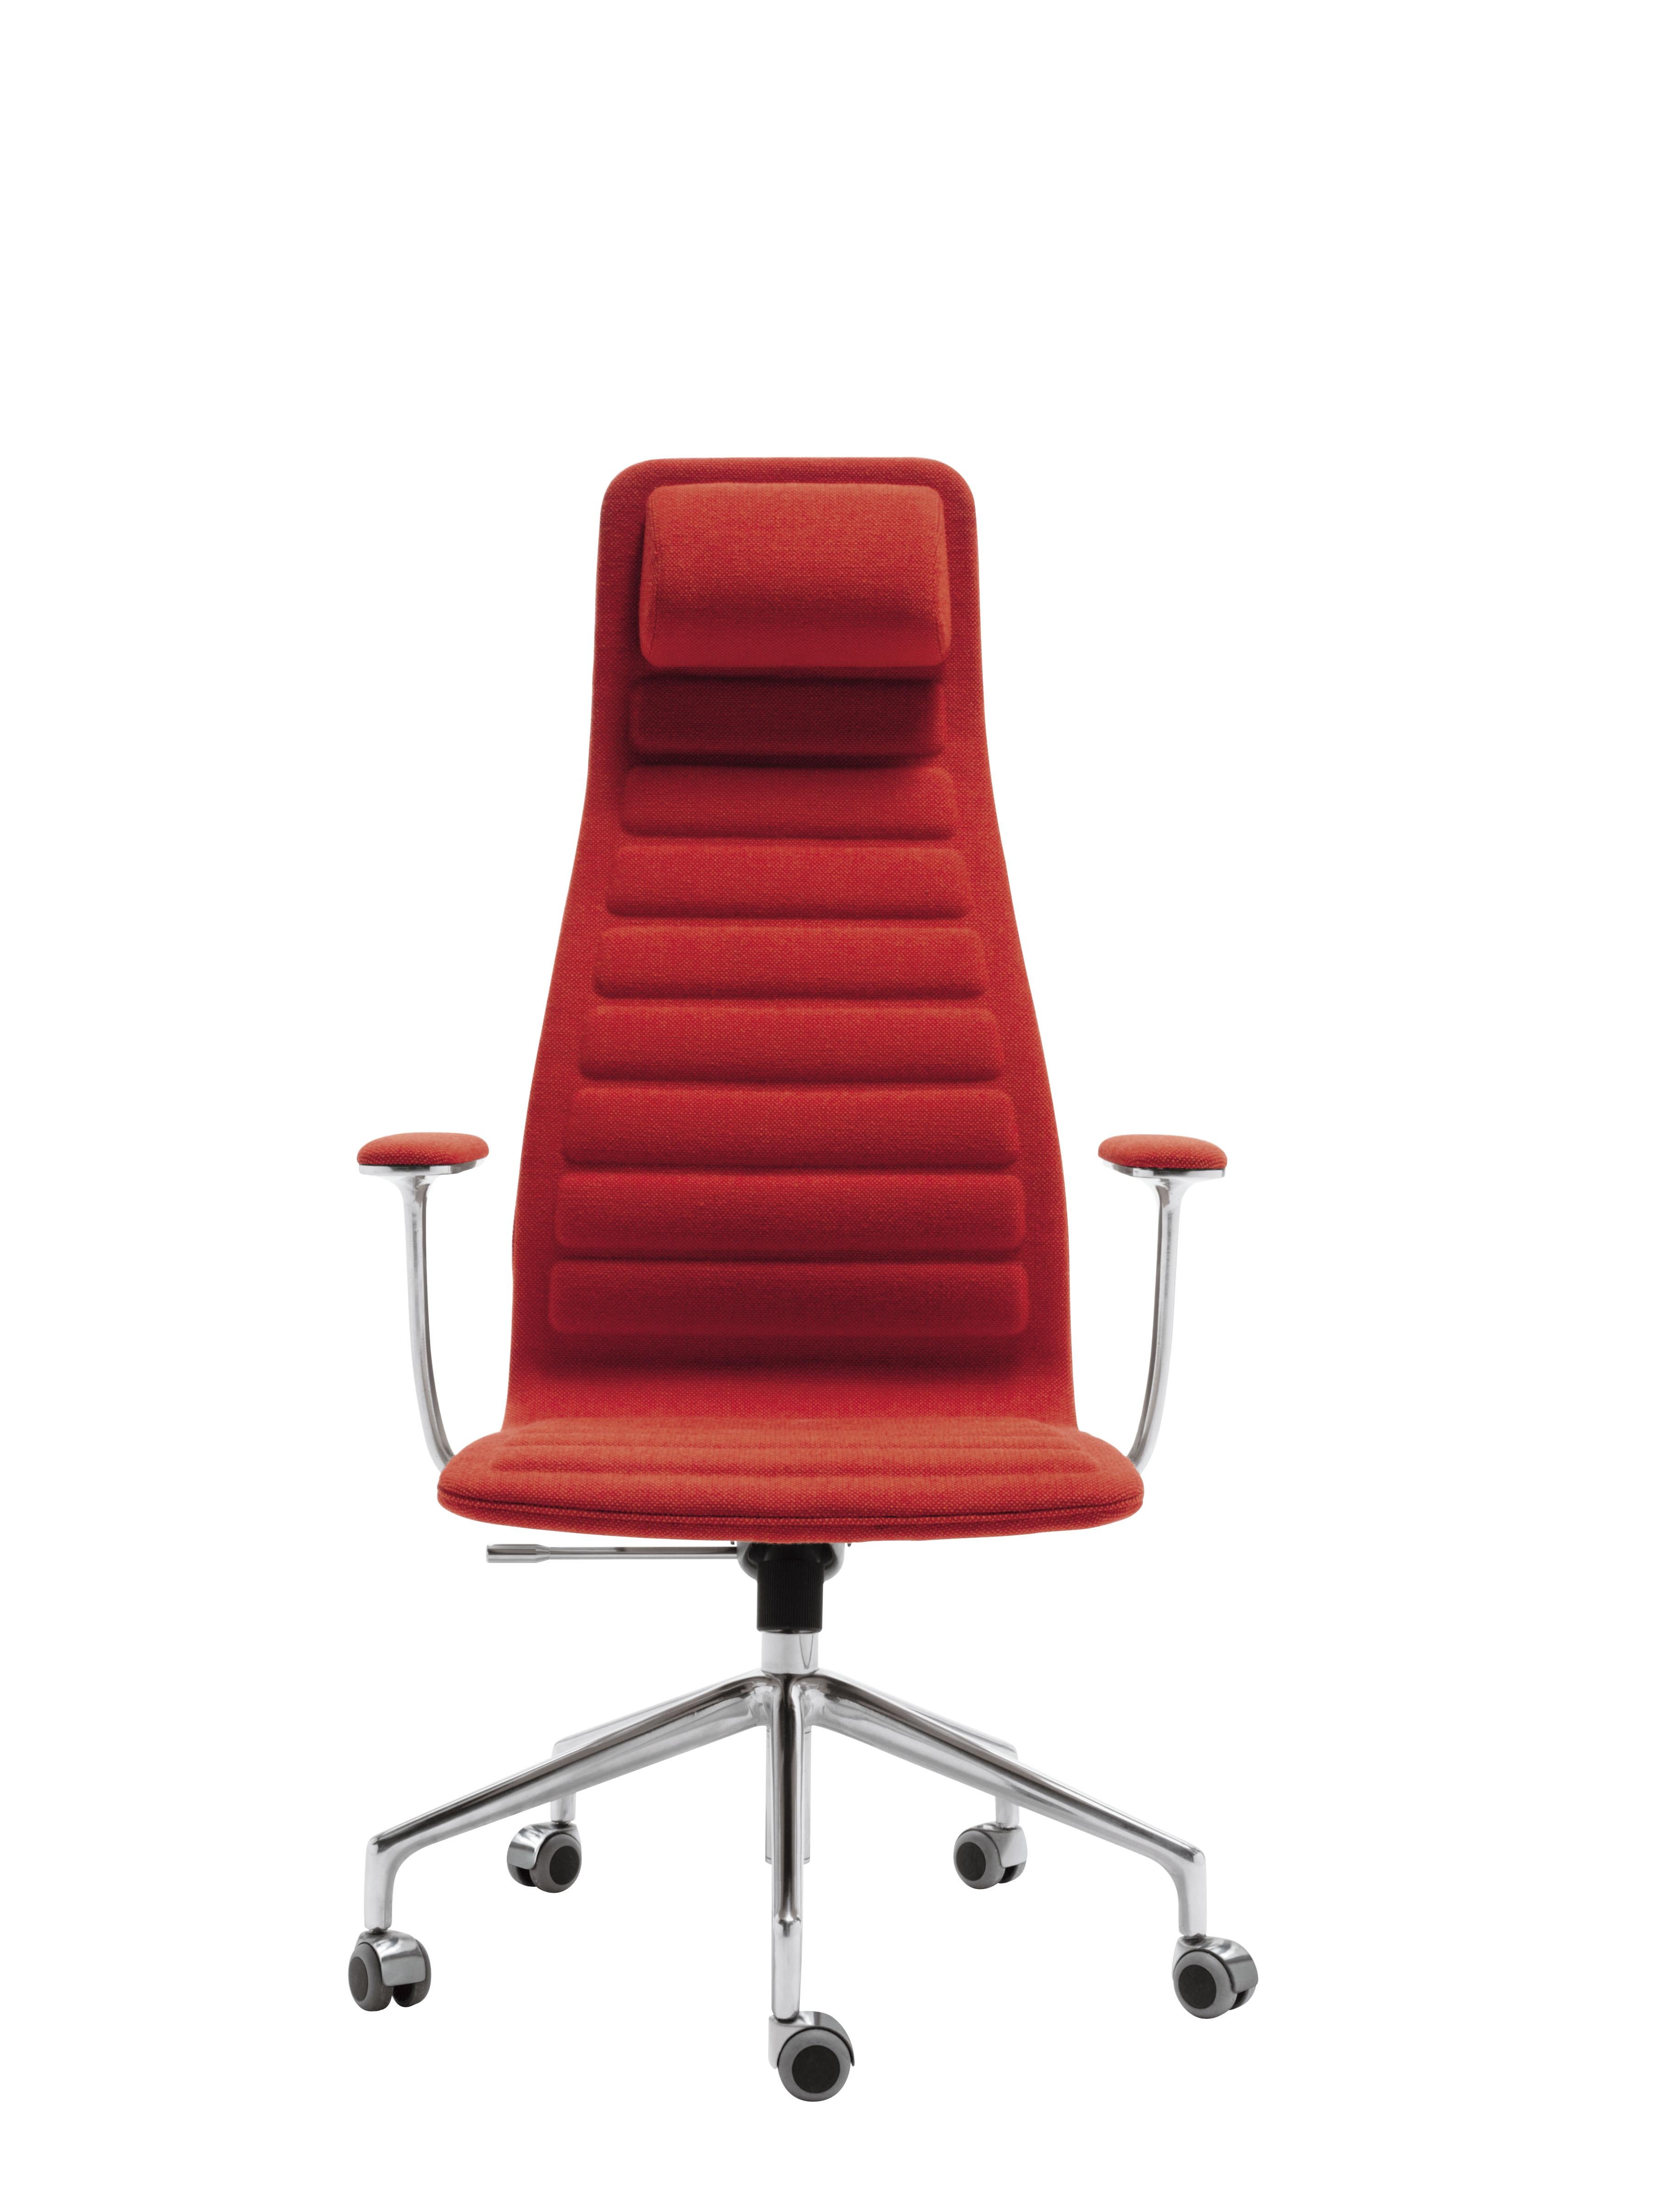 For Sale: Orange (Hallingdal 2 561) Jasper Morrison Lotus High Chair in Polished Chrome for Cappellini